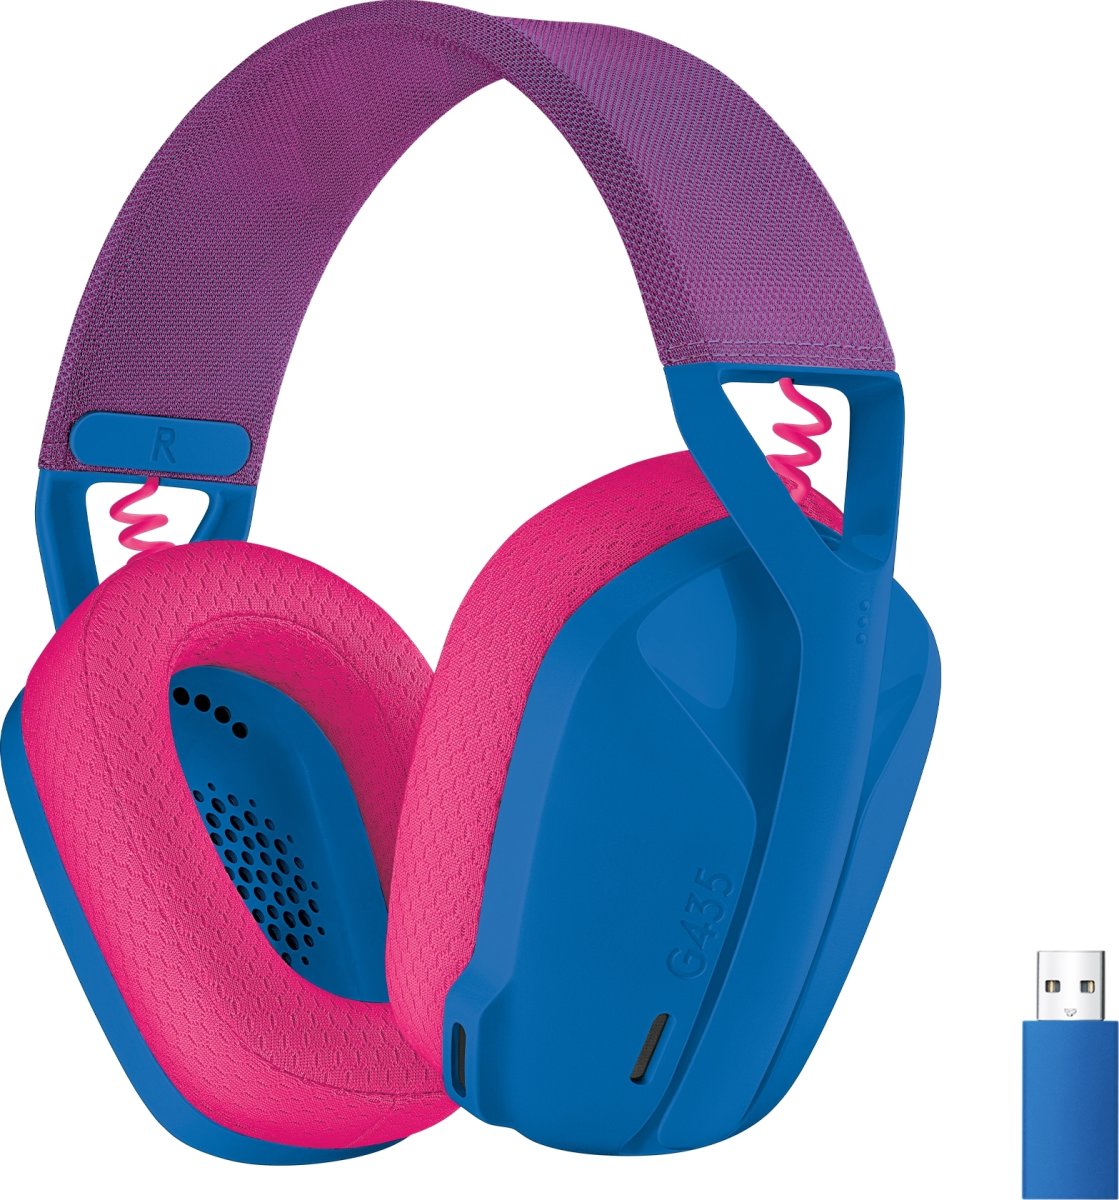 Logitech G435 LIGHTSPEED trådløst headset, blå